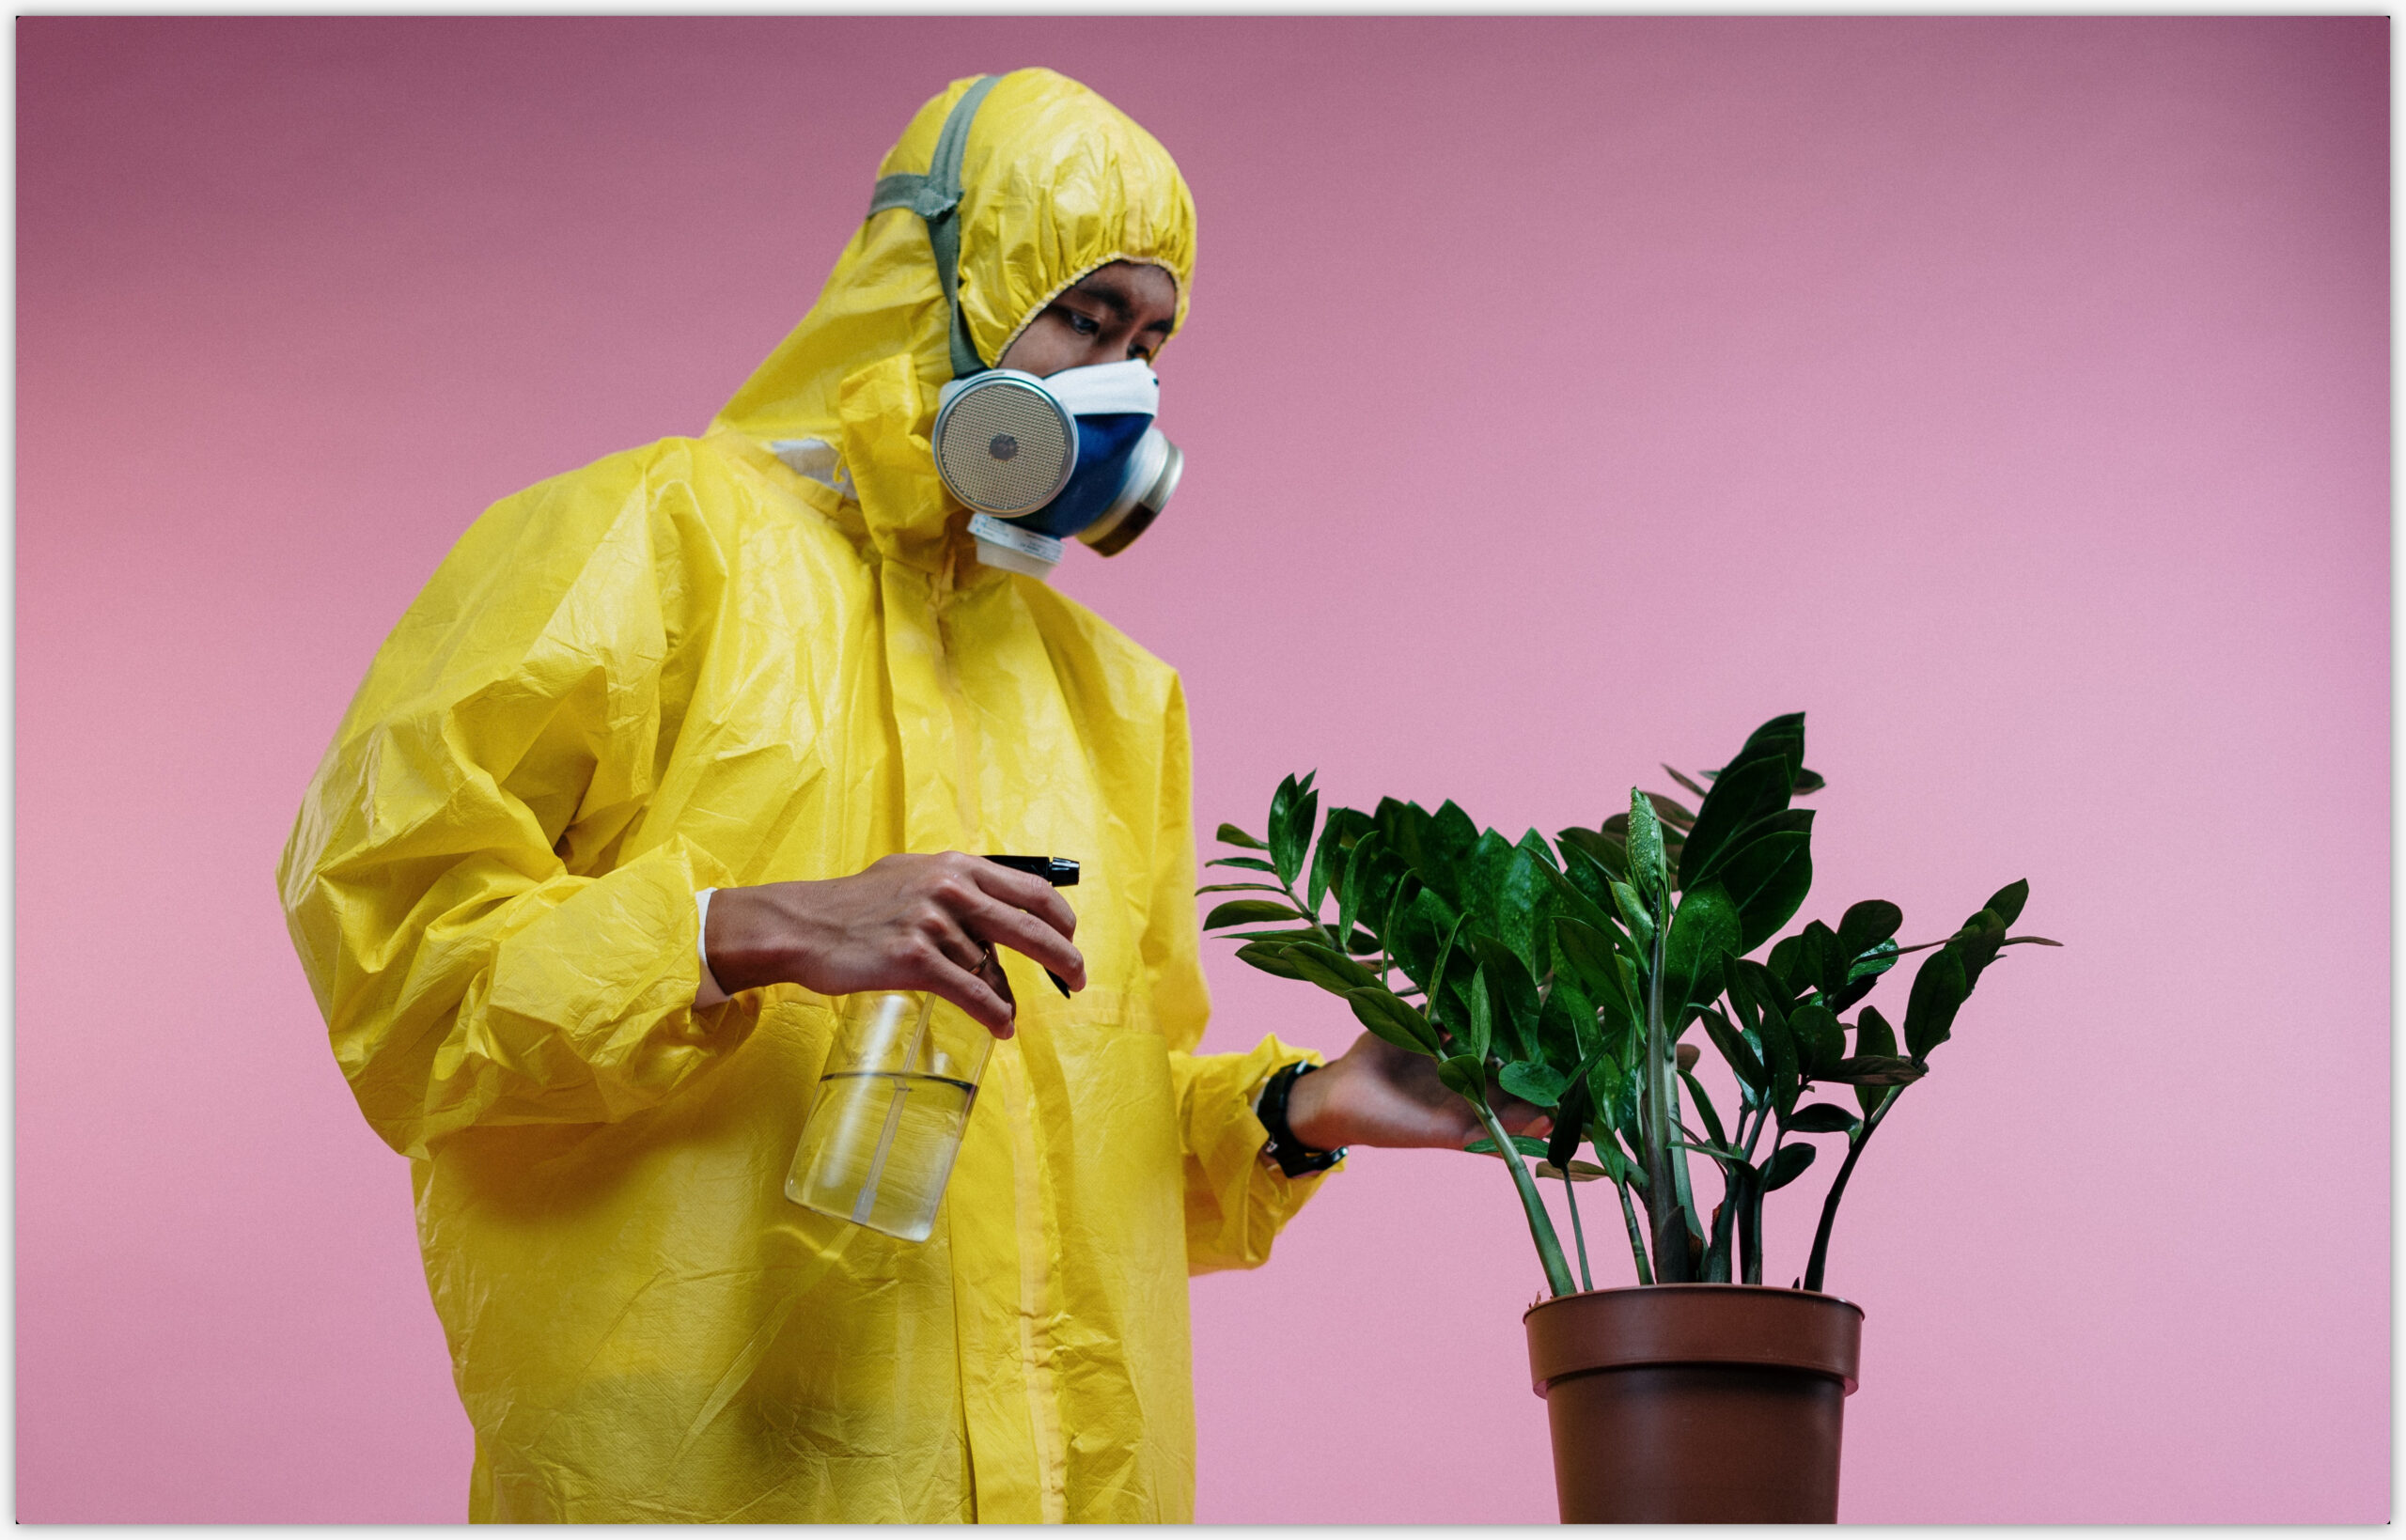 Plant care with guy wearing hazmat suit.